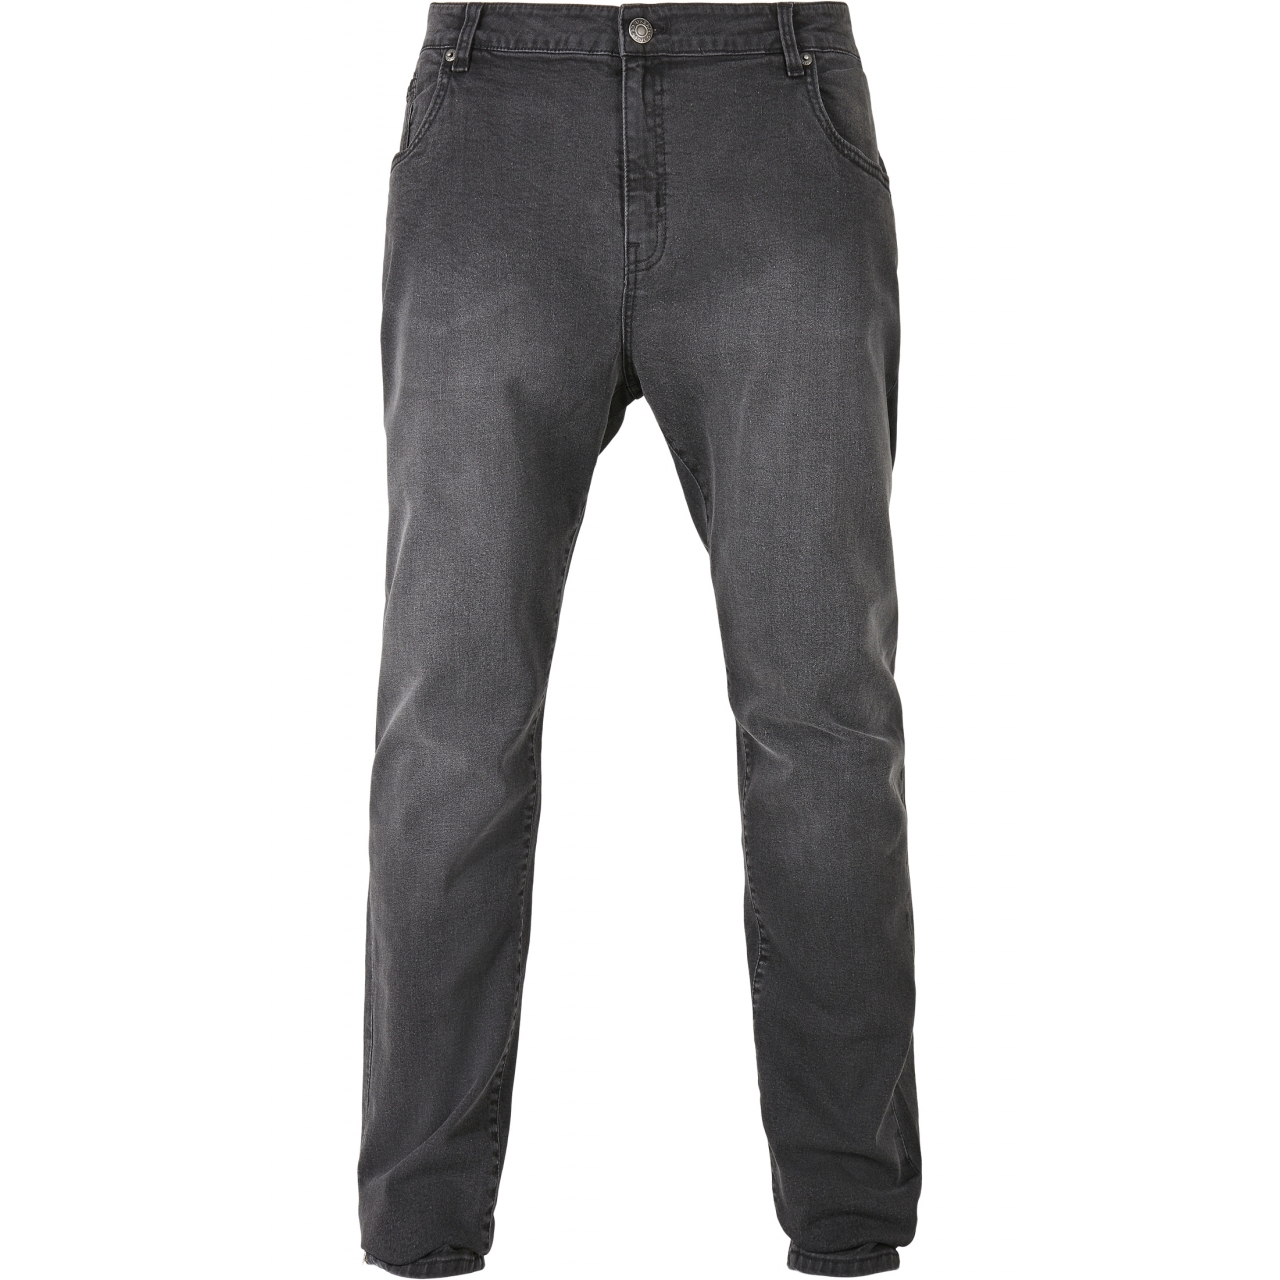 Džíny Urban Classics Slim Fit Zip Jeans - černé, 30/32